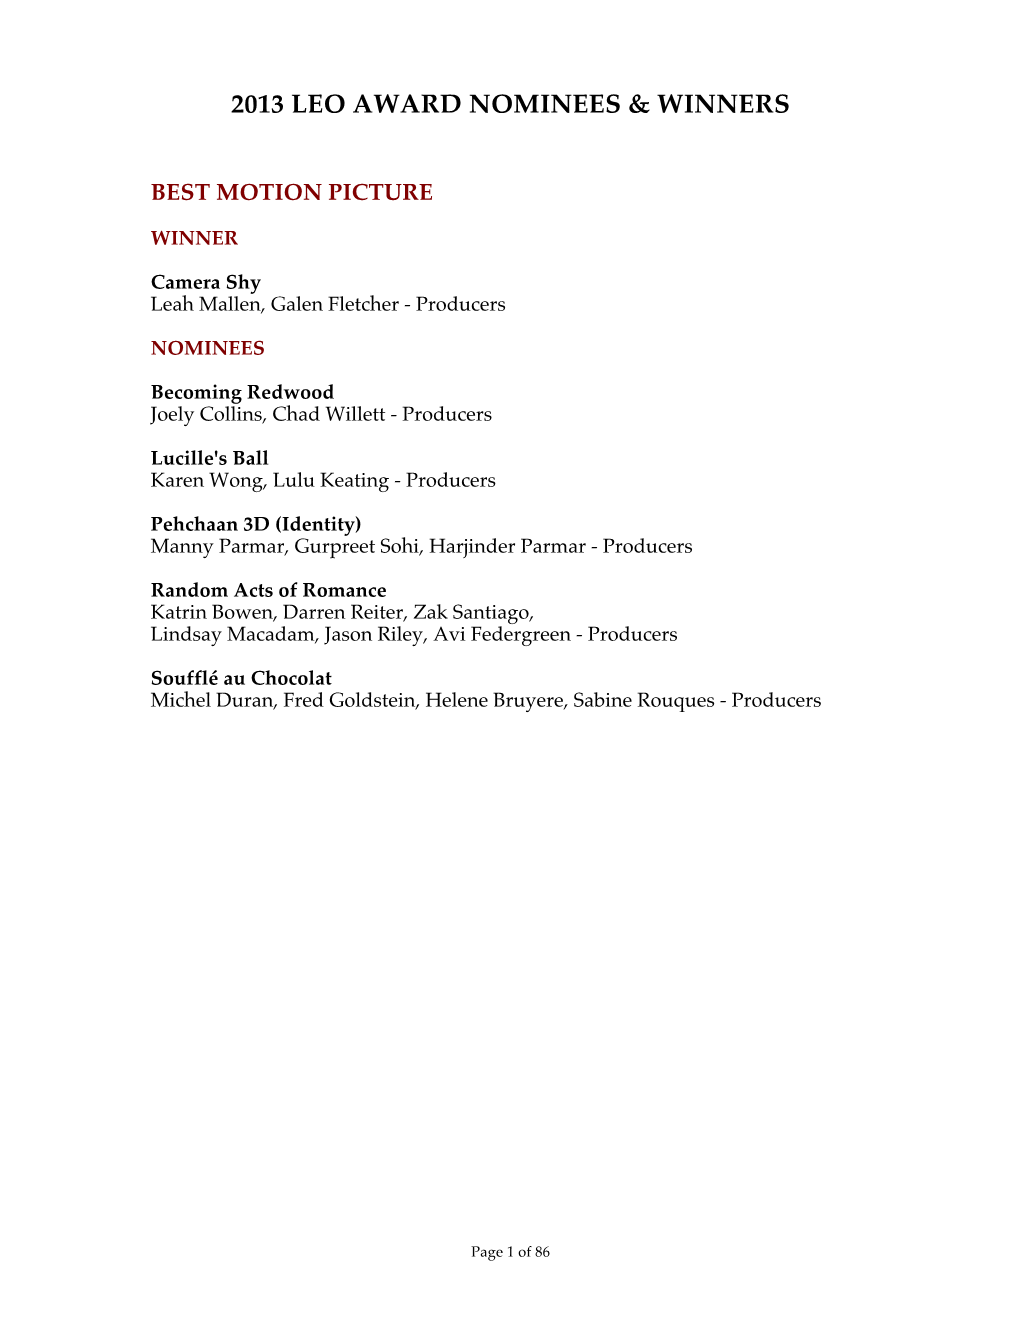 2013 Leo Award Nominees & Winners